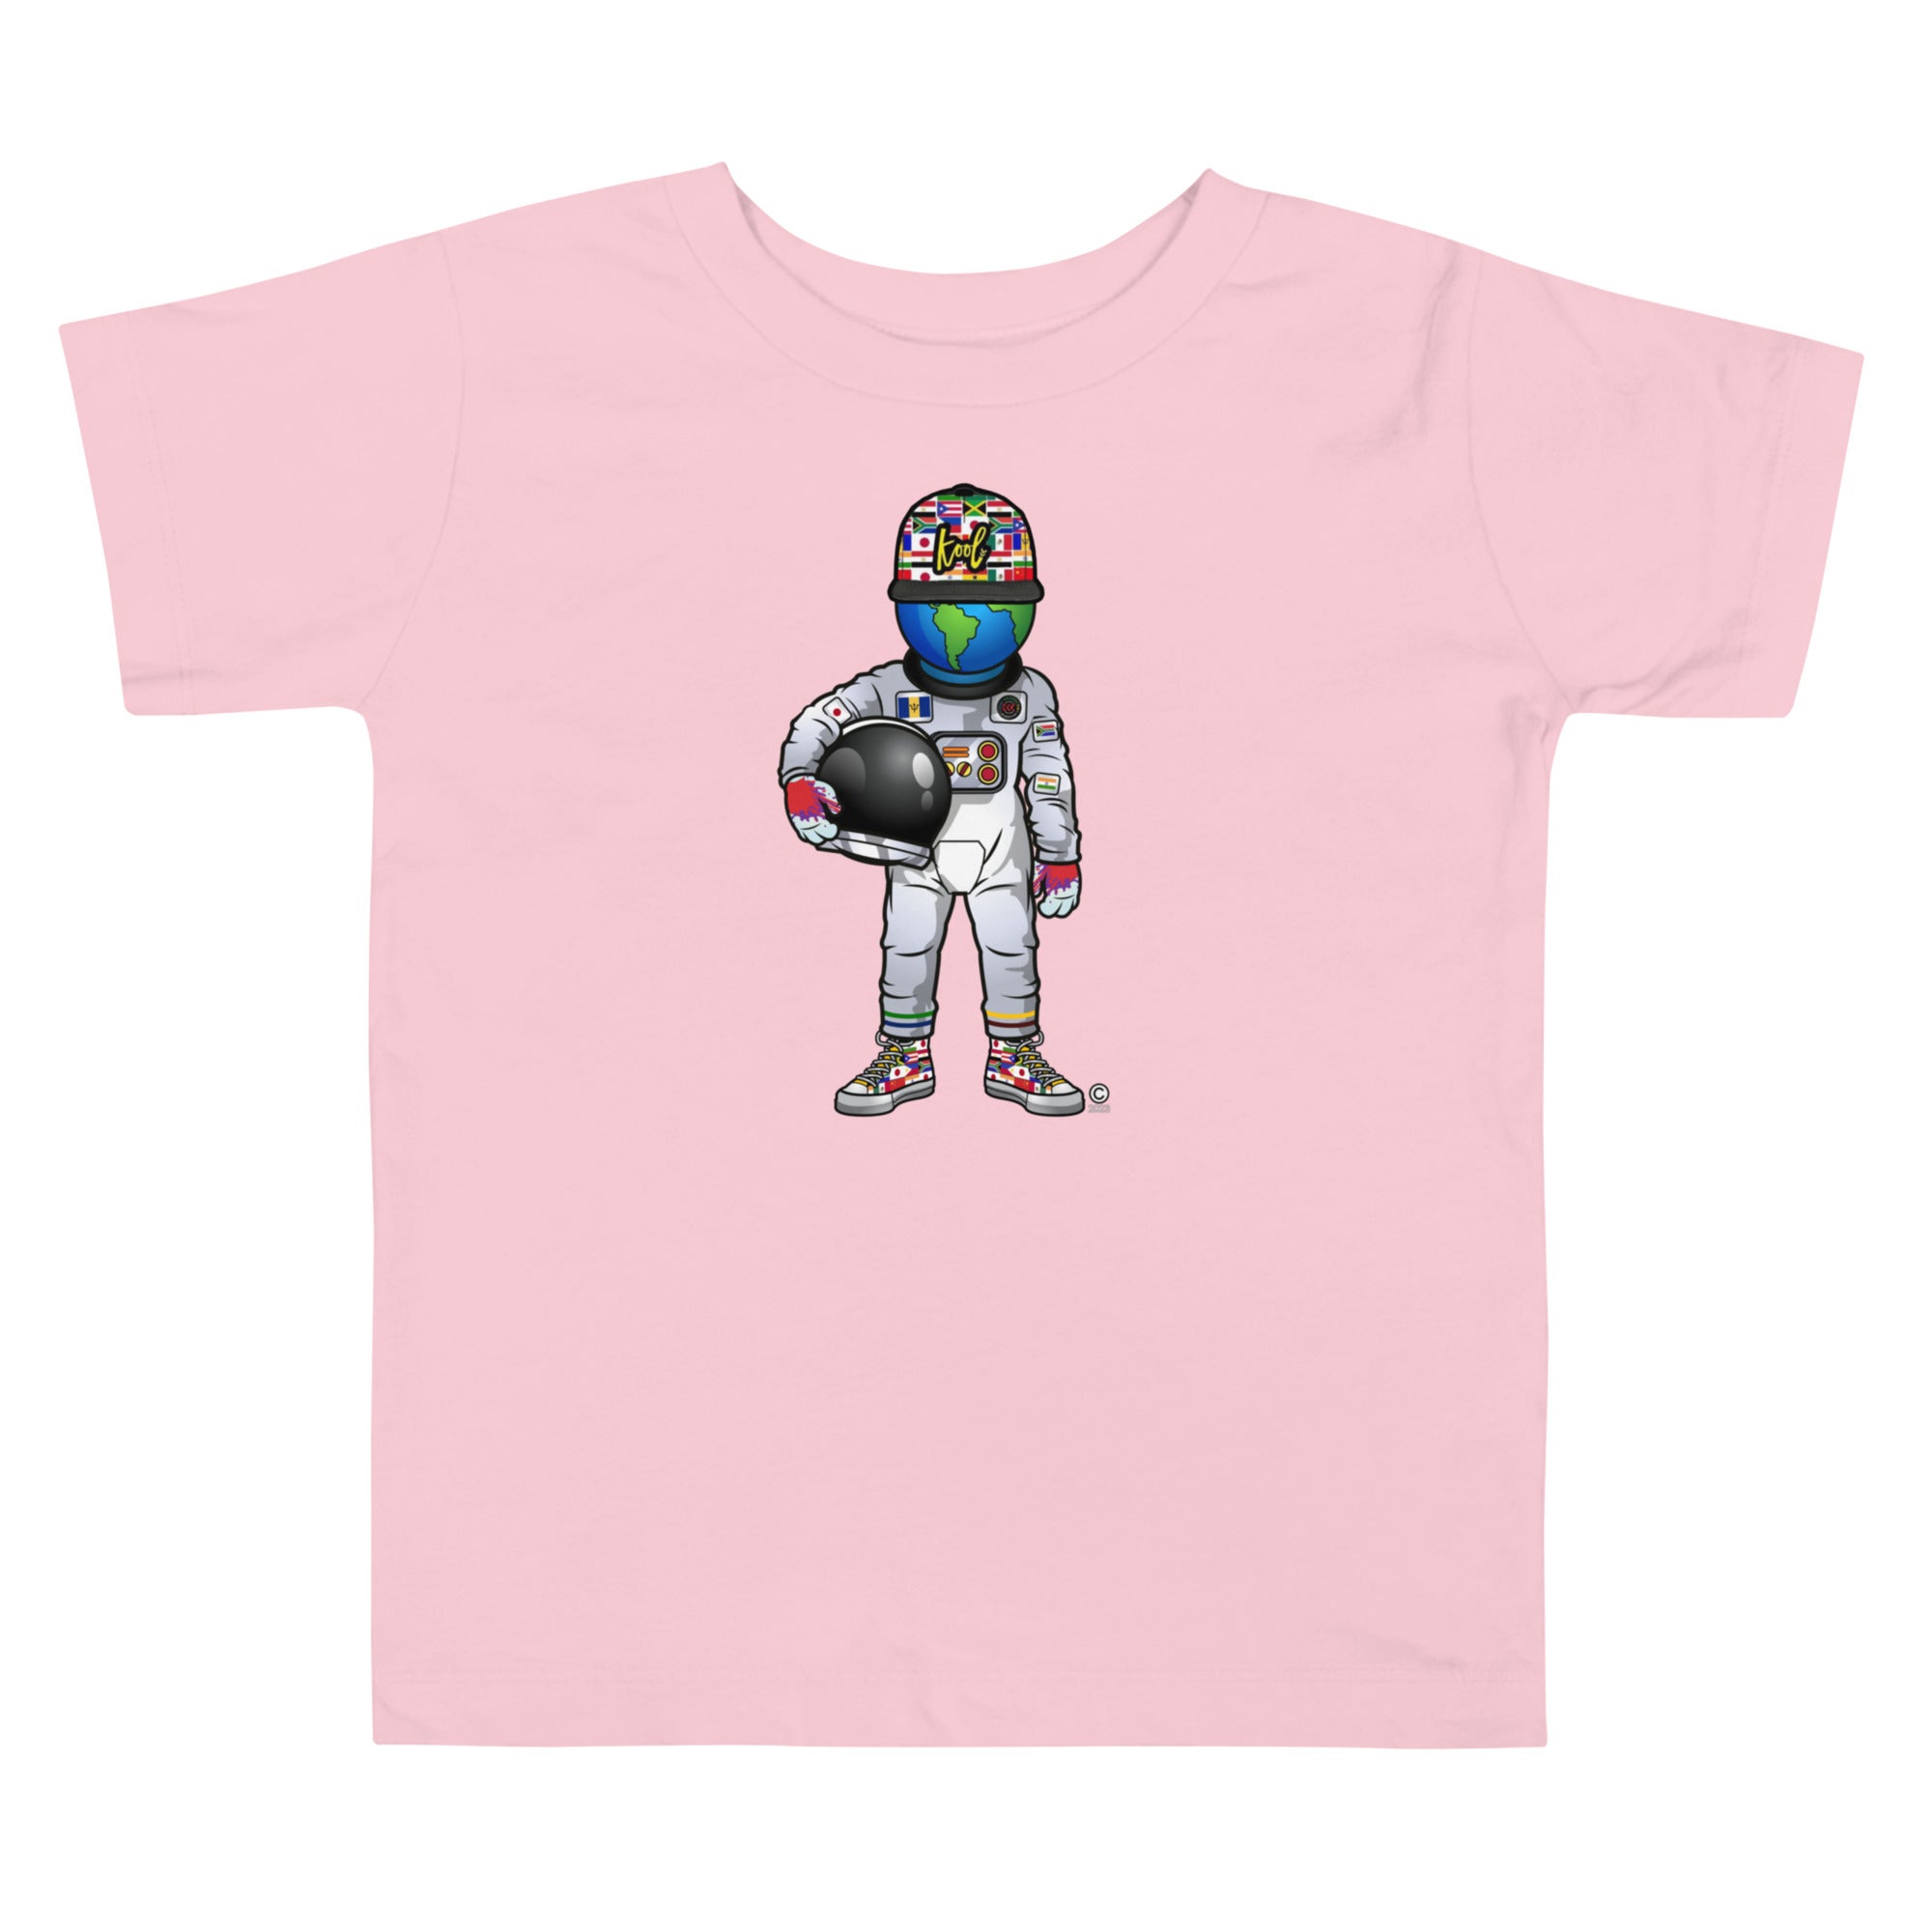 Kool World Toddler Astronaut